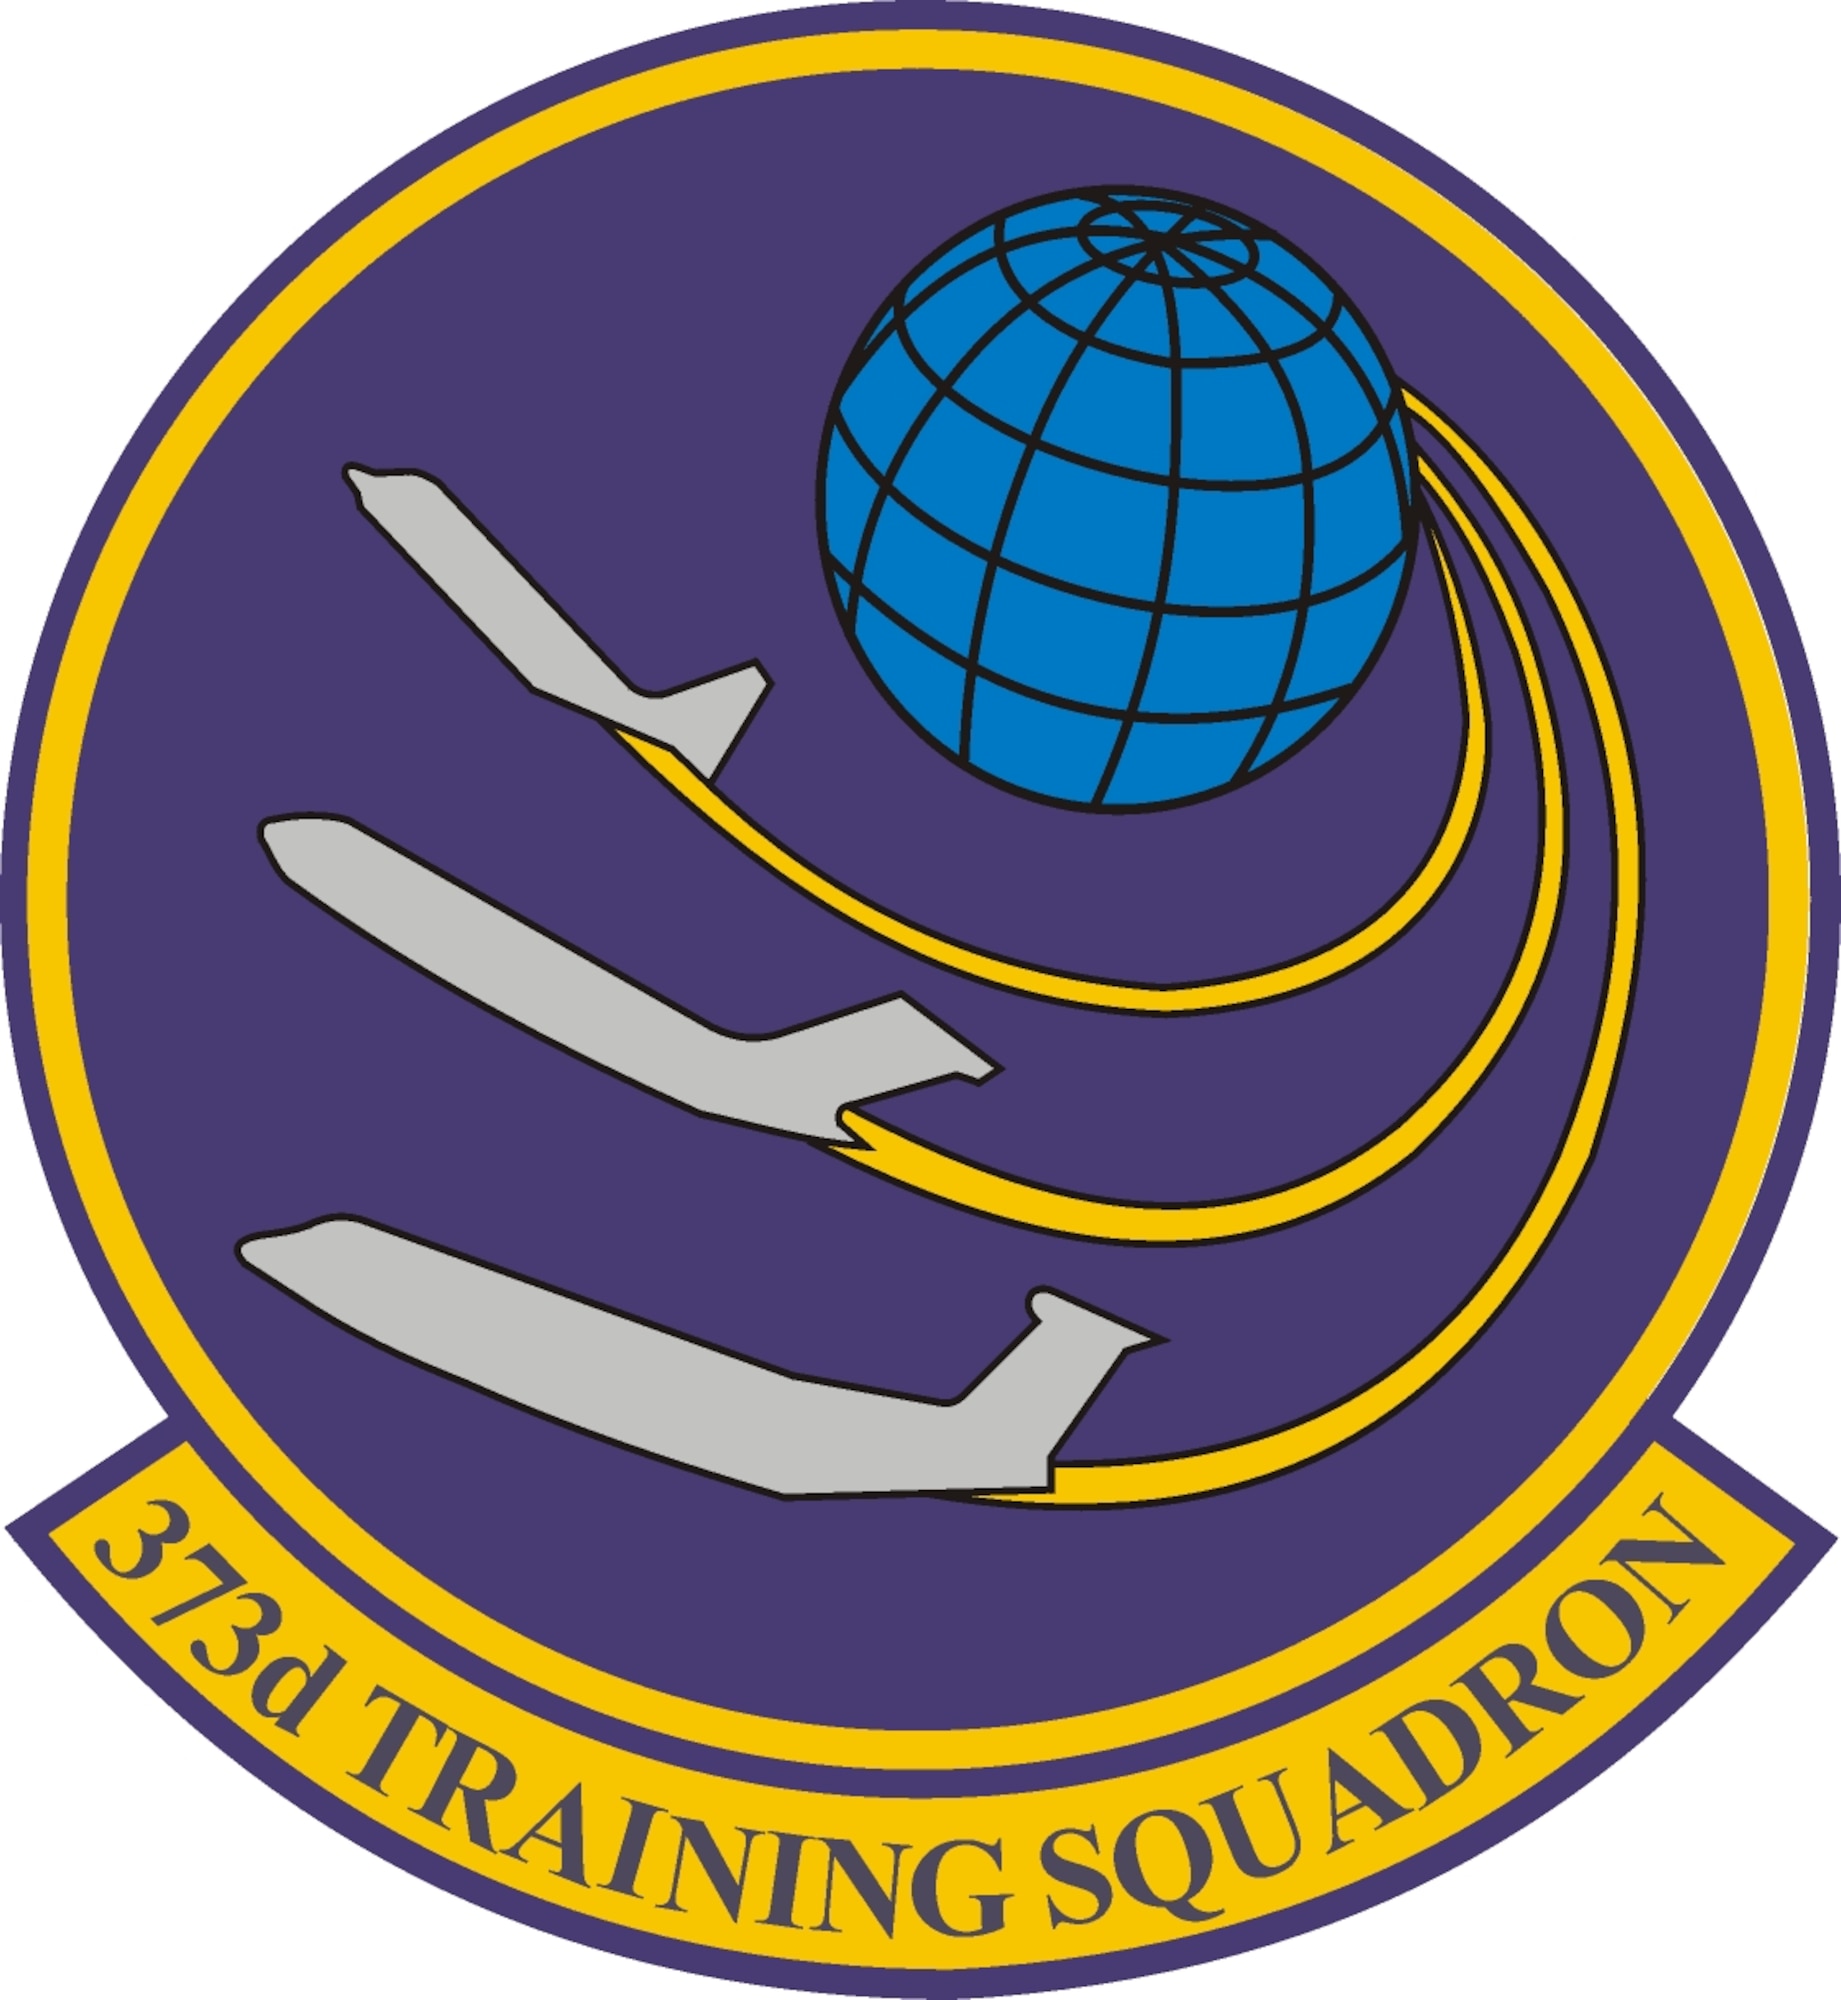 373rd Training Squadron